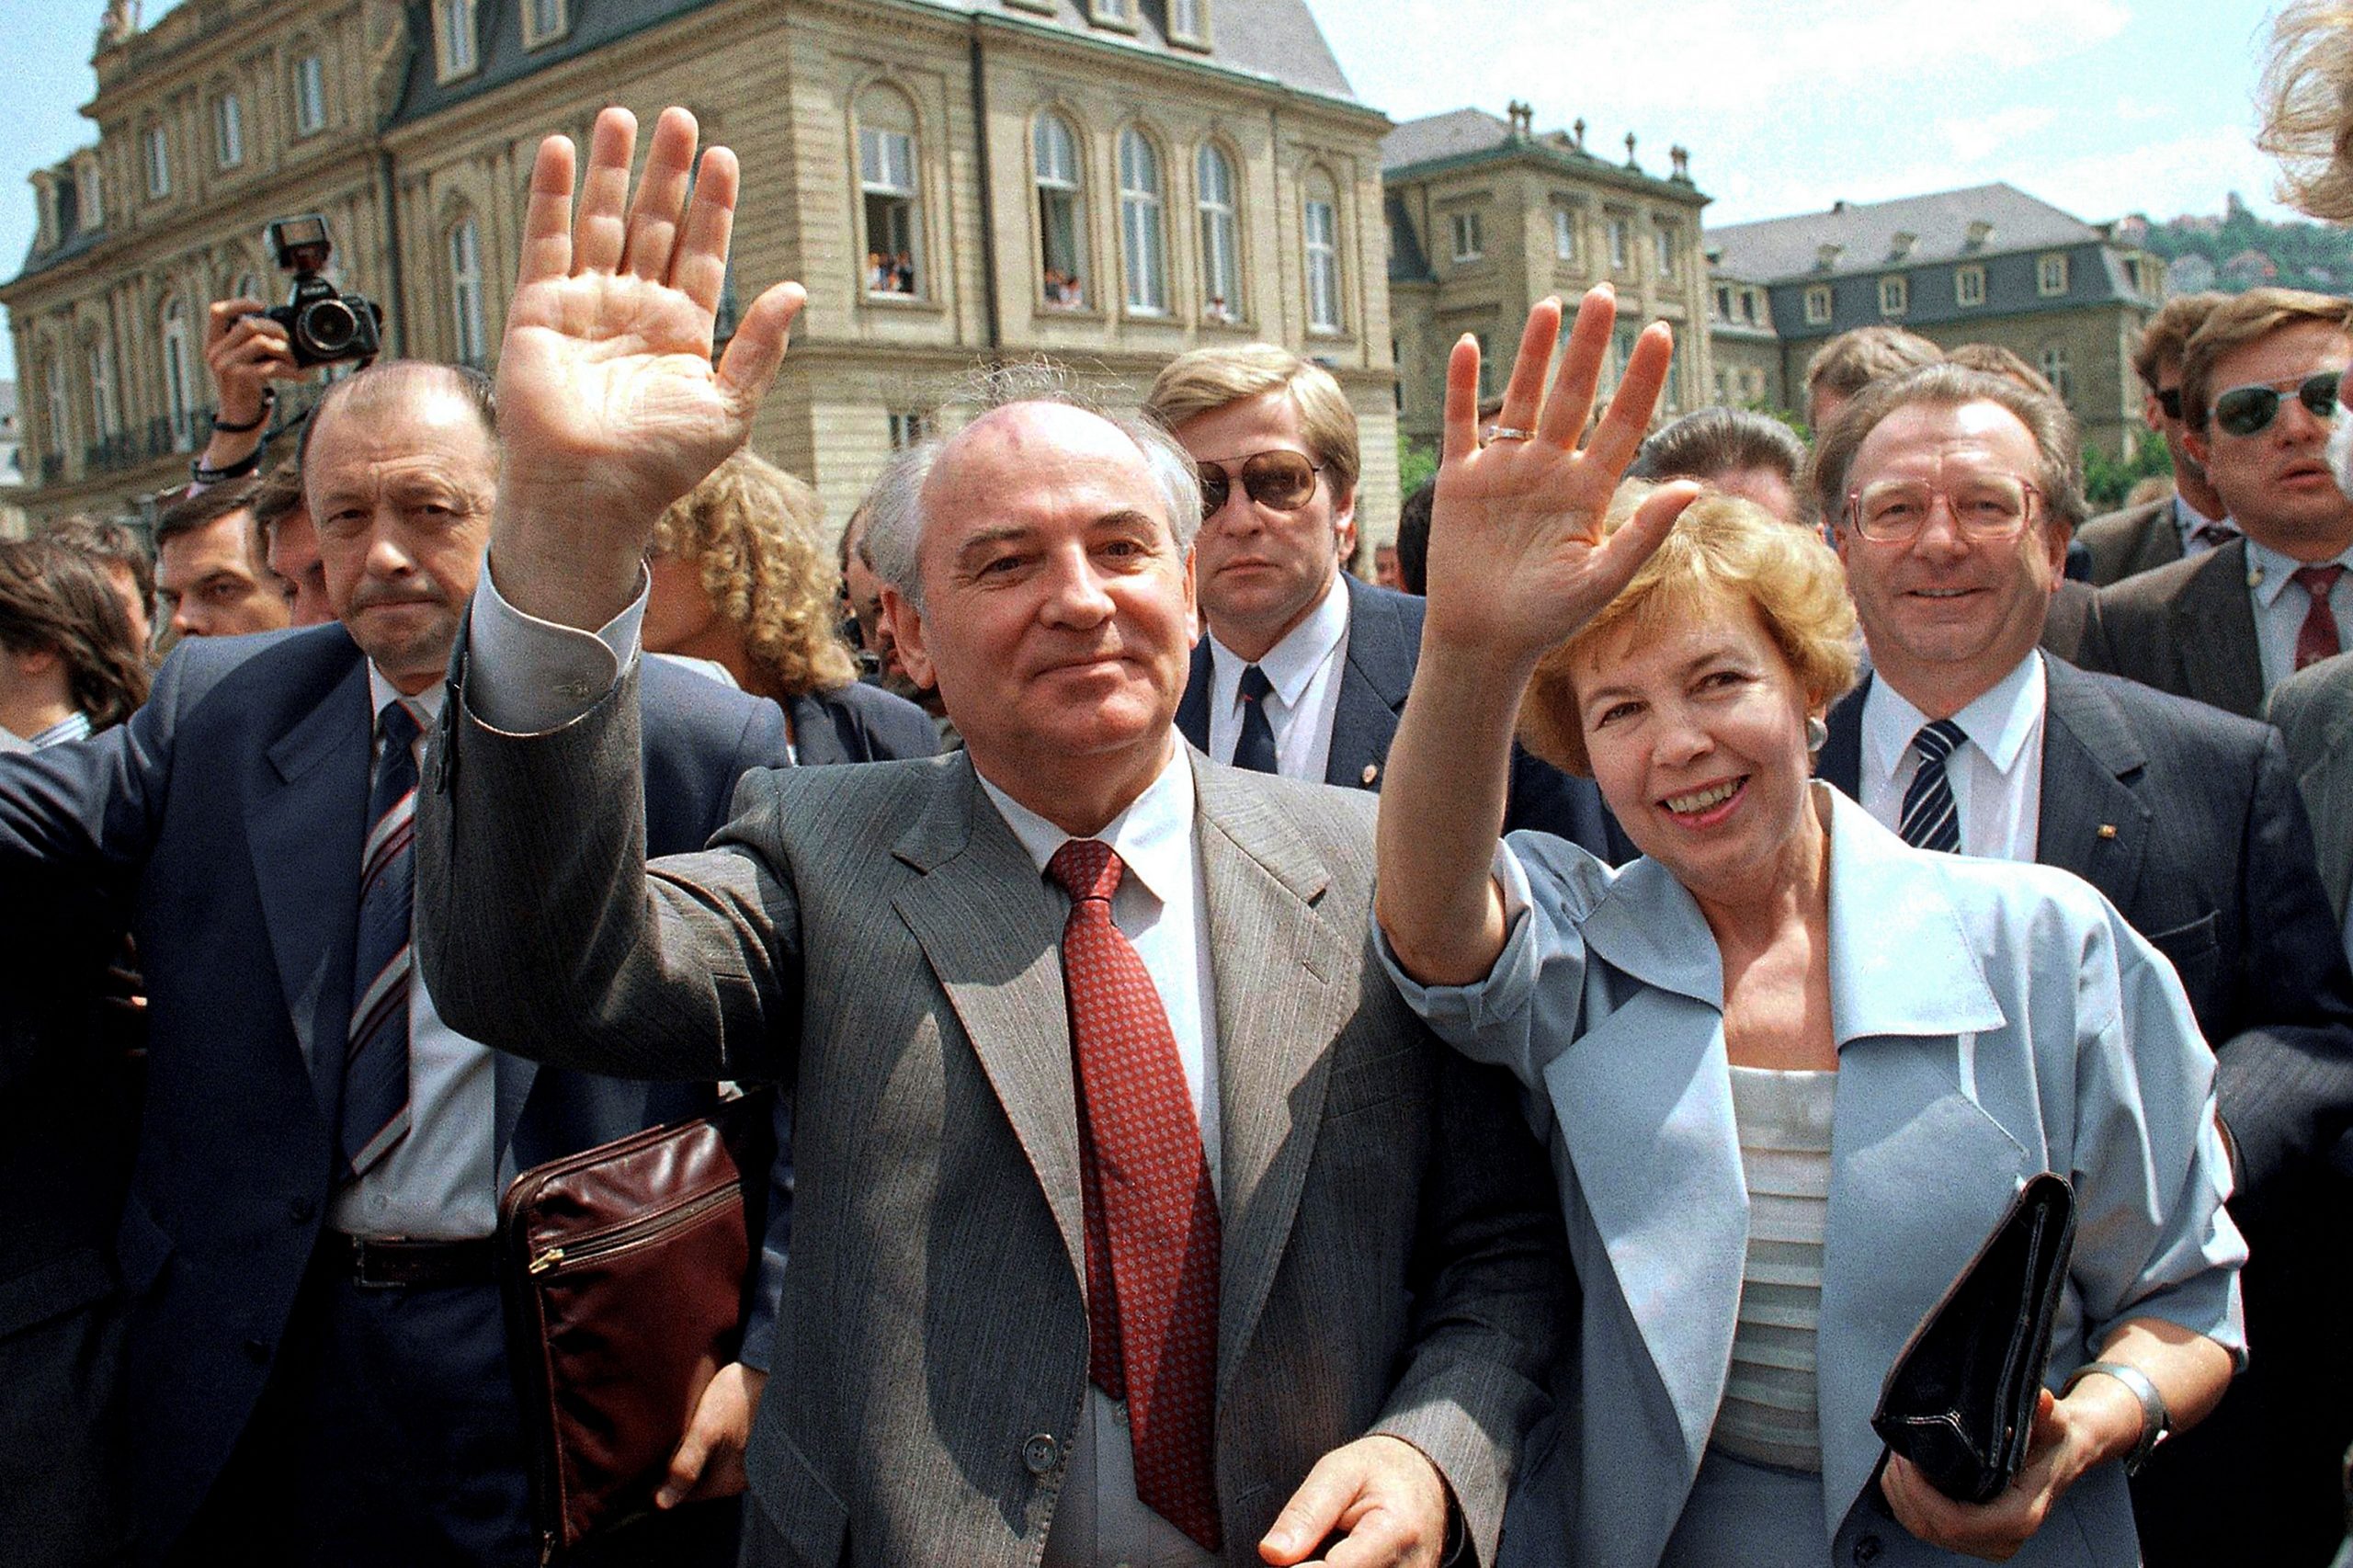 Mikhail Gorbachev’s marriage, like his politics, broke the mold